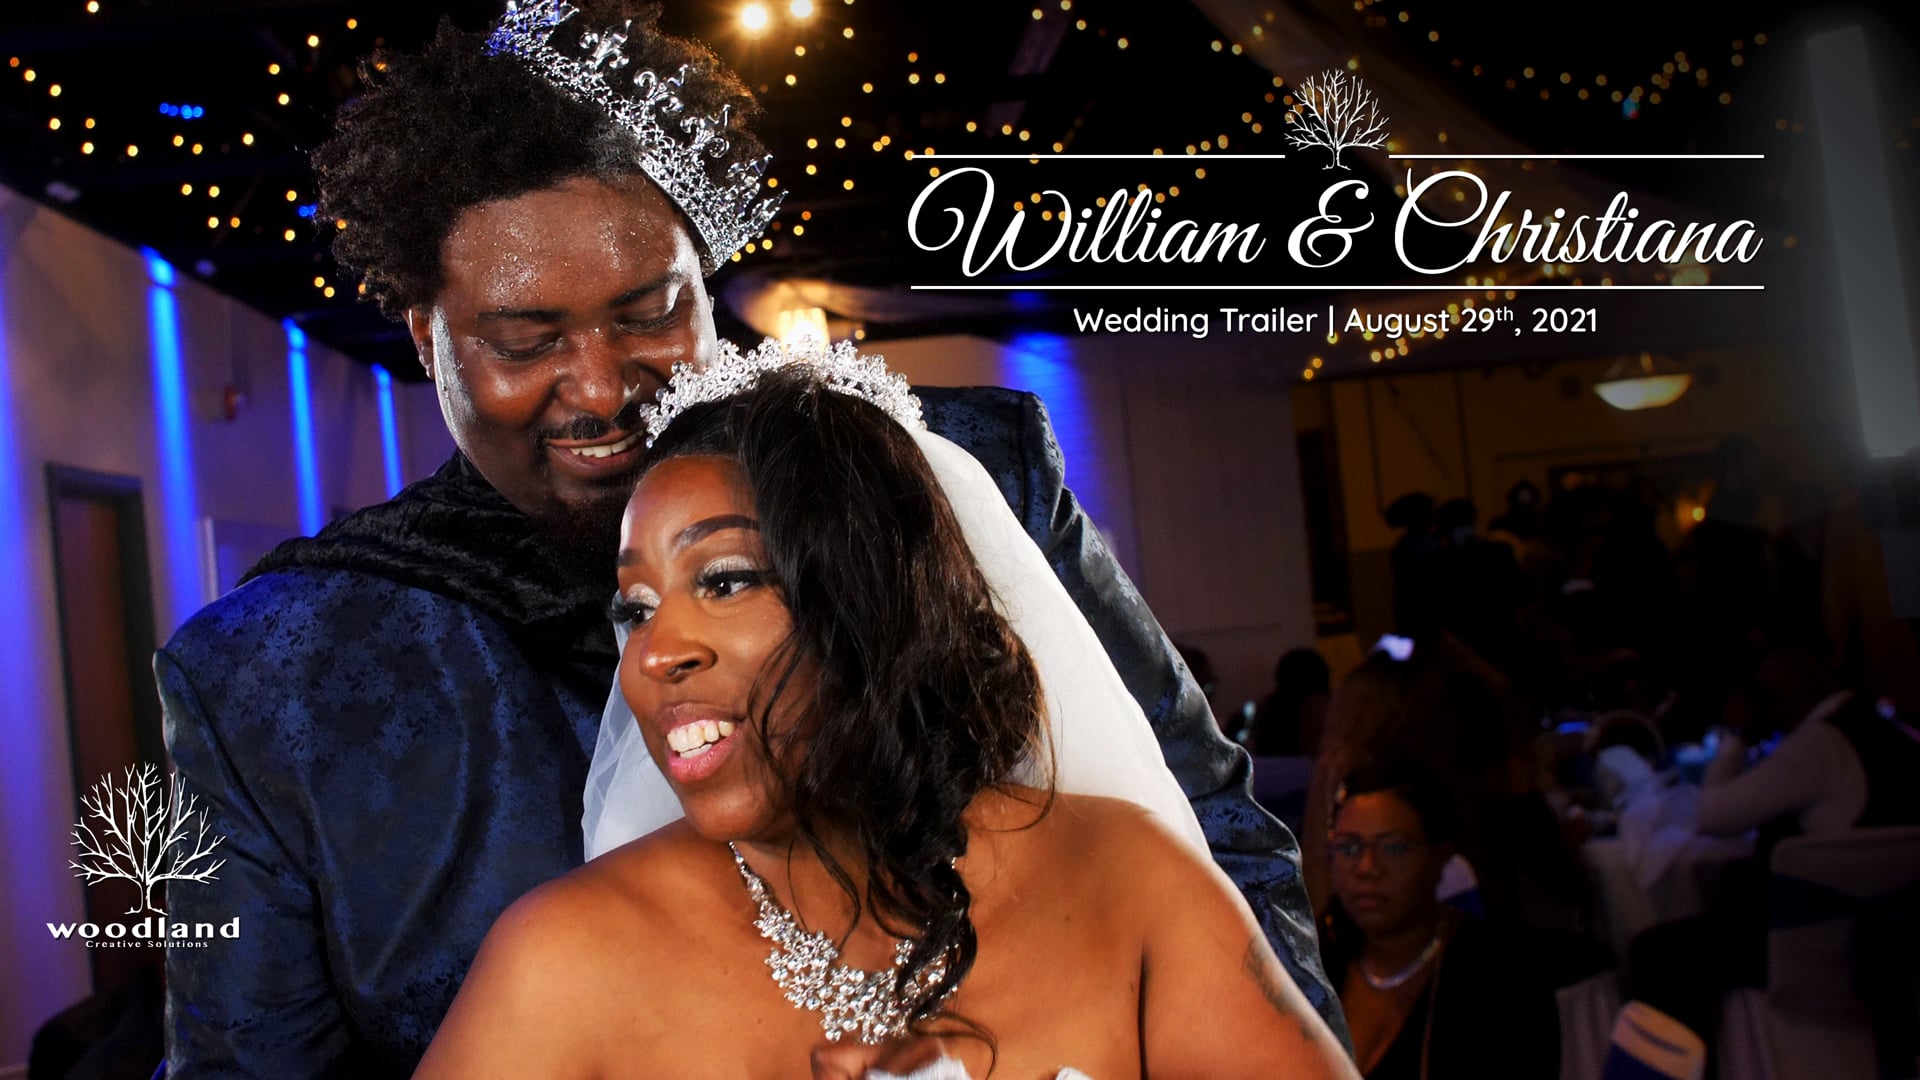 William & Christiana - Wedding Trailer